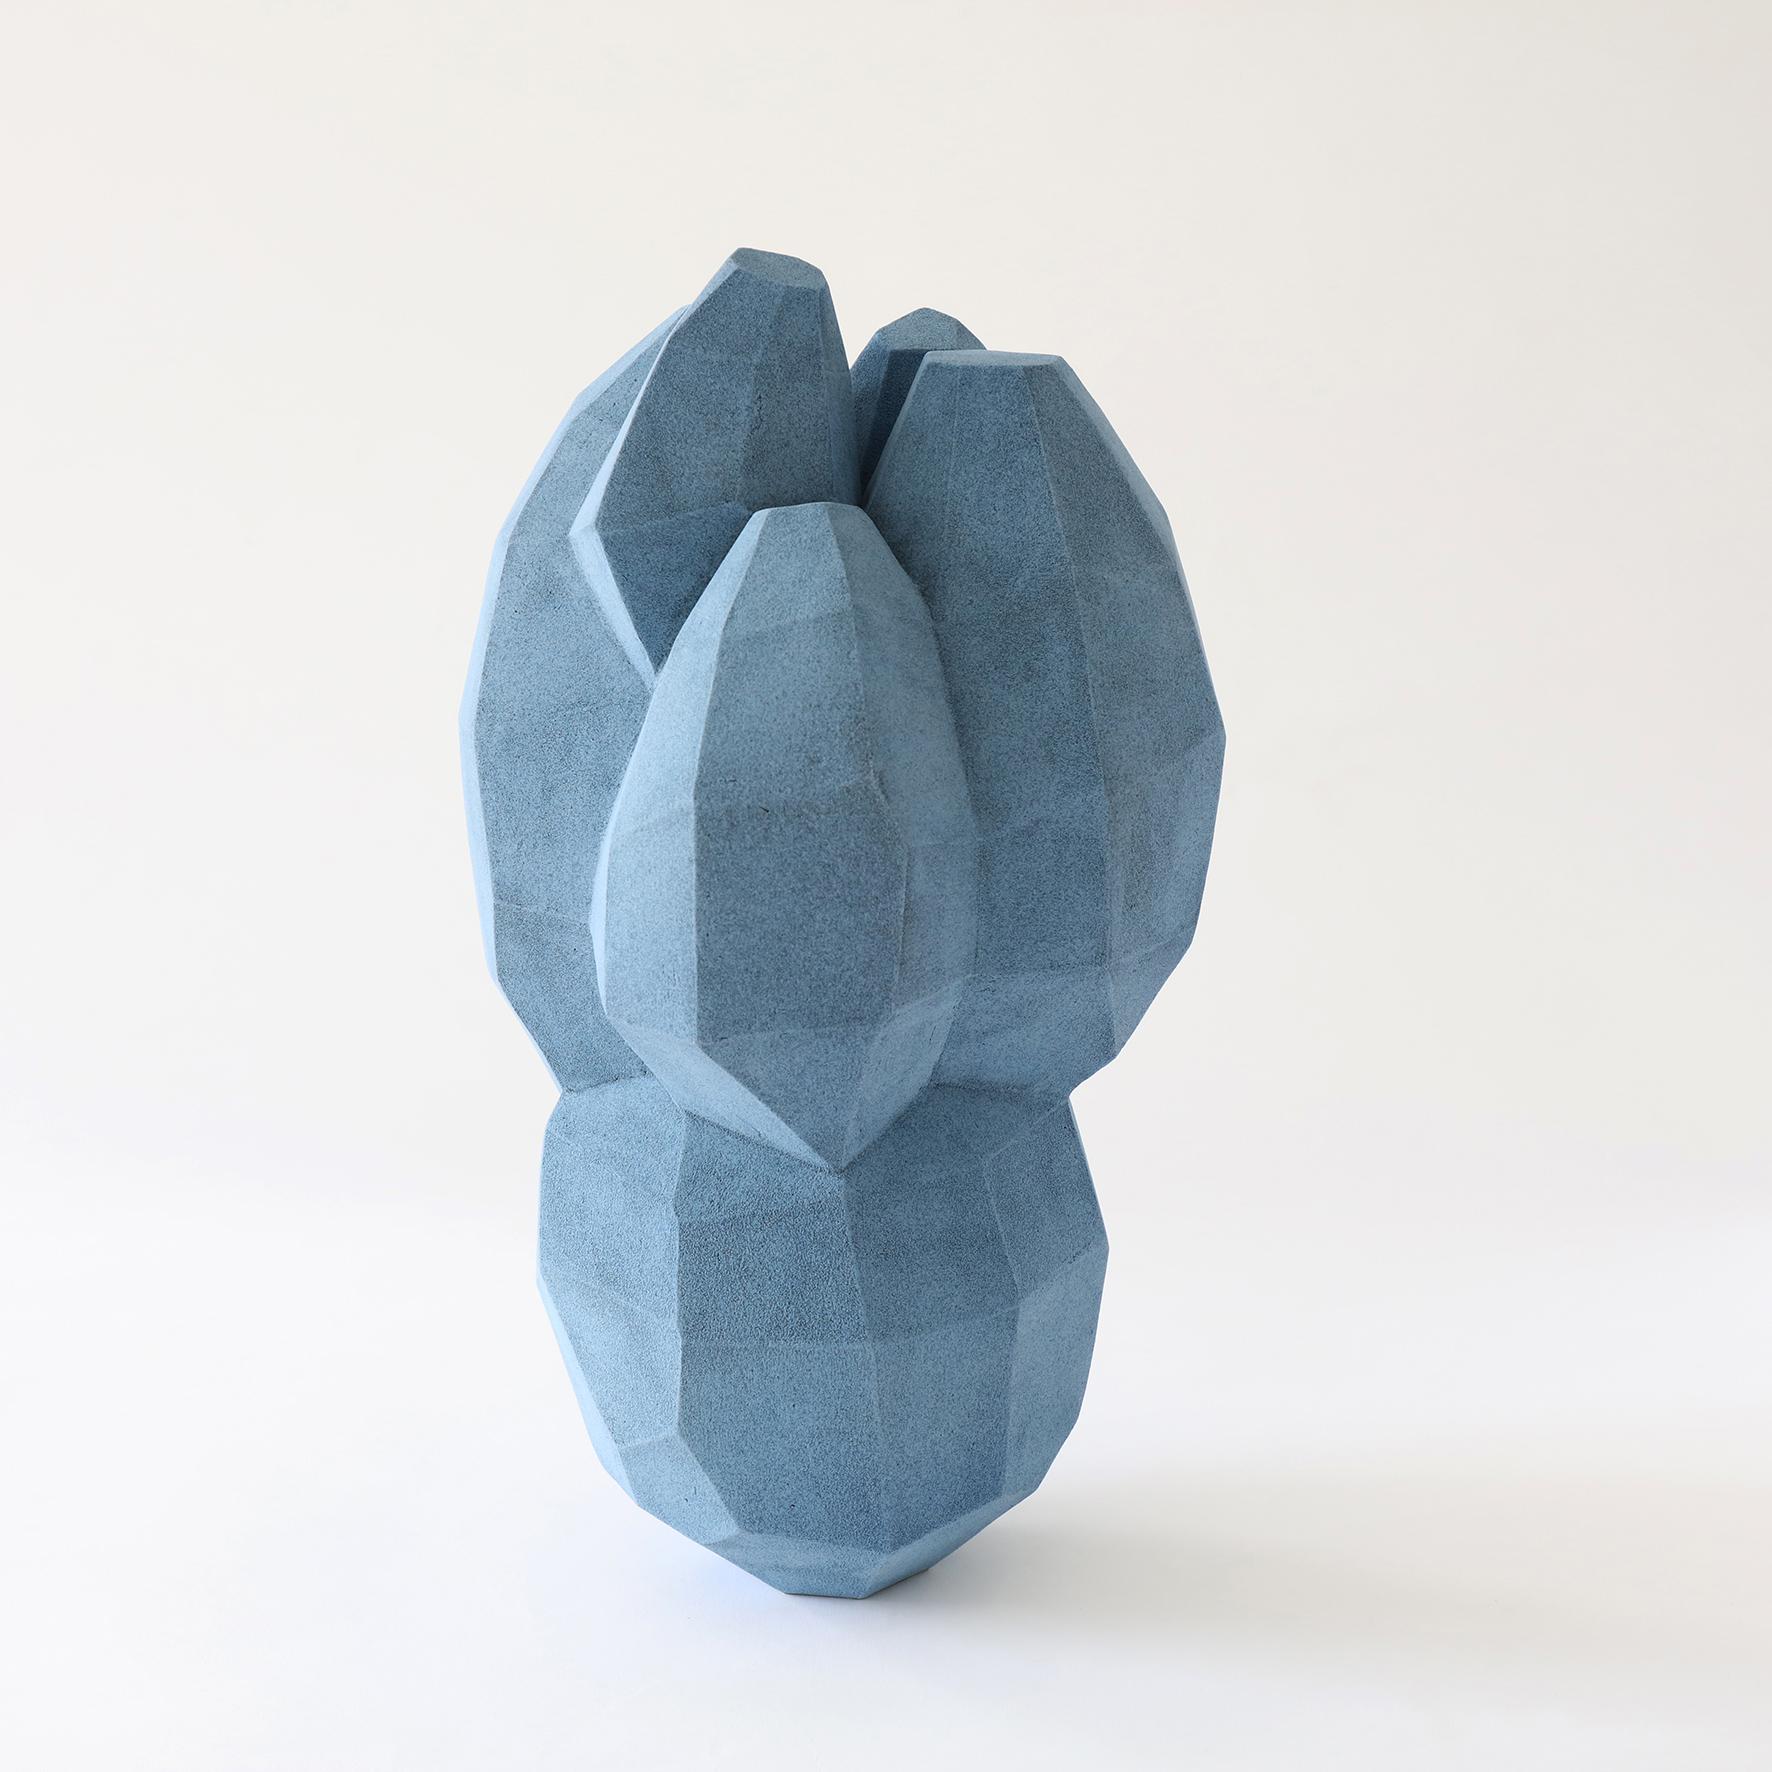 Unique Blue Pottery by Turi Heisselberg Pedersen (Handgefertigt)